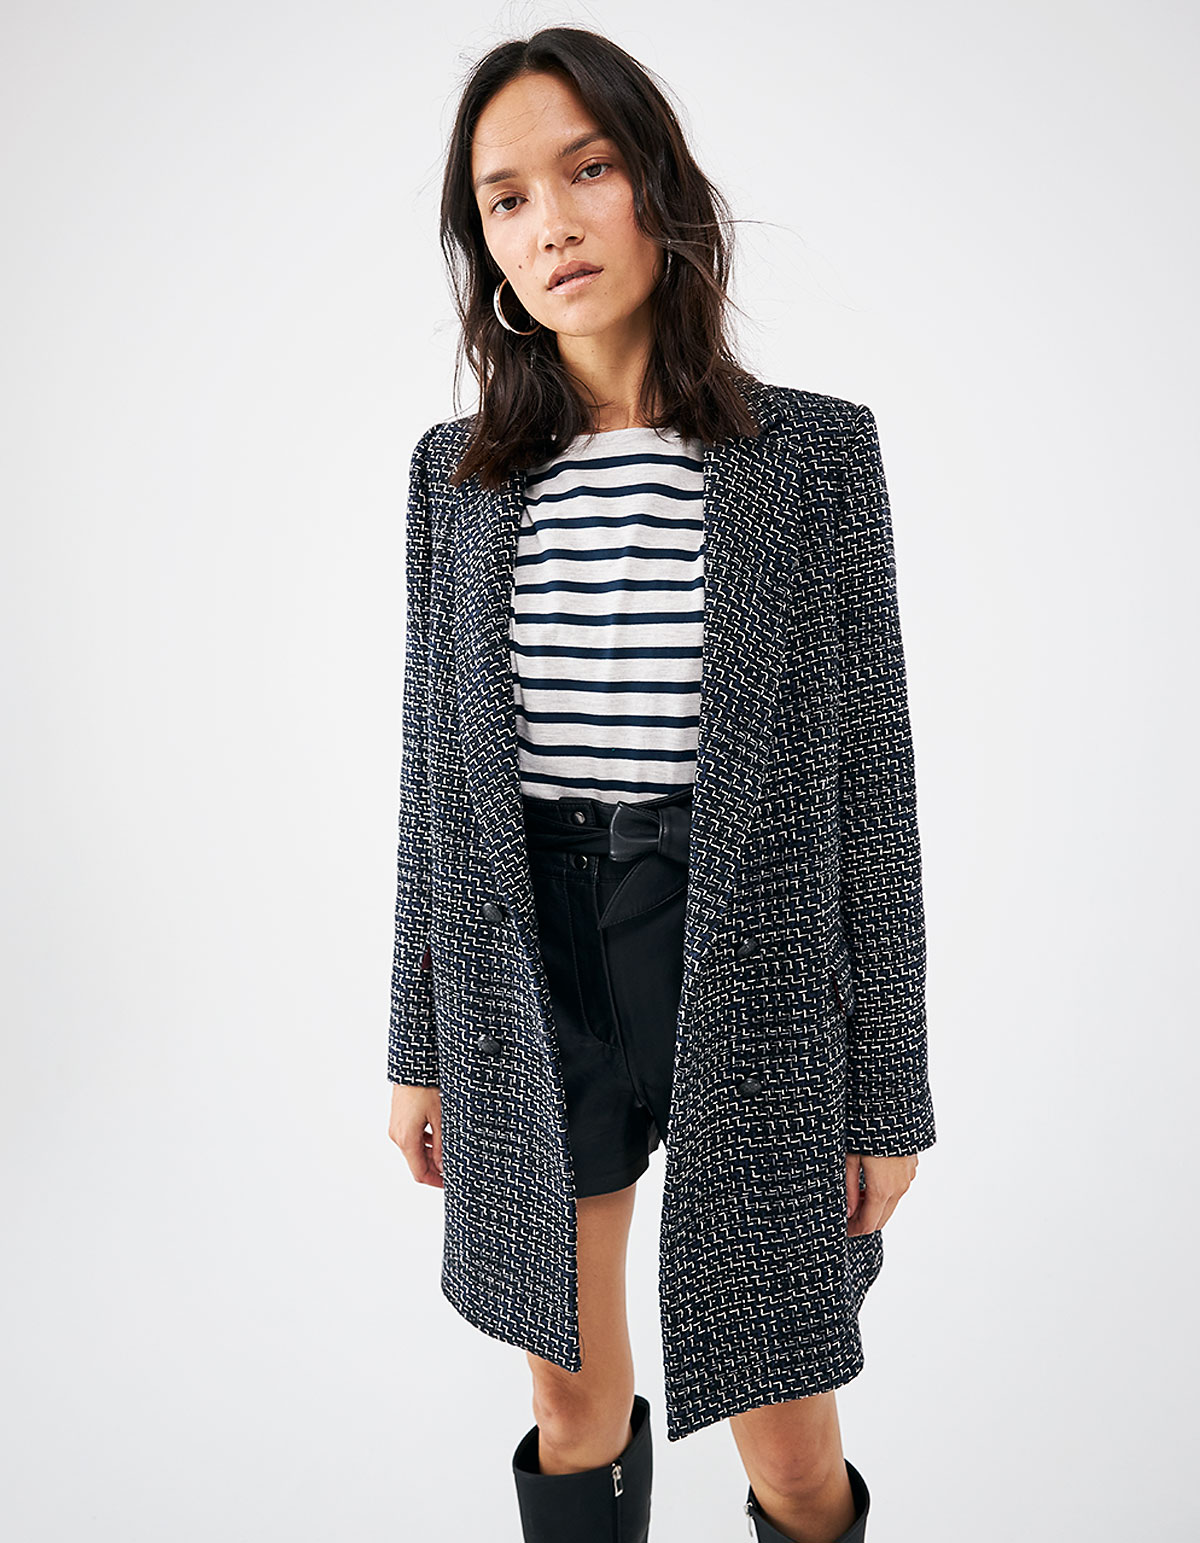 Women’s navy semi-plain cotton blend mid-length coat